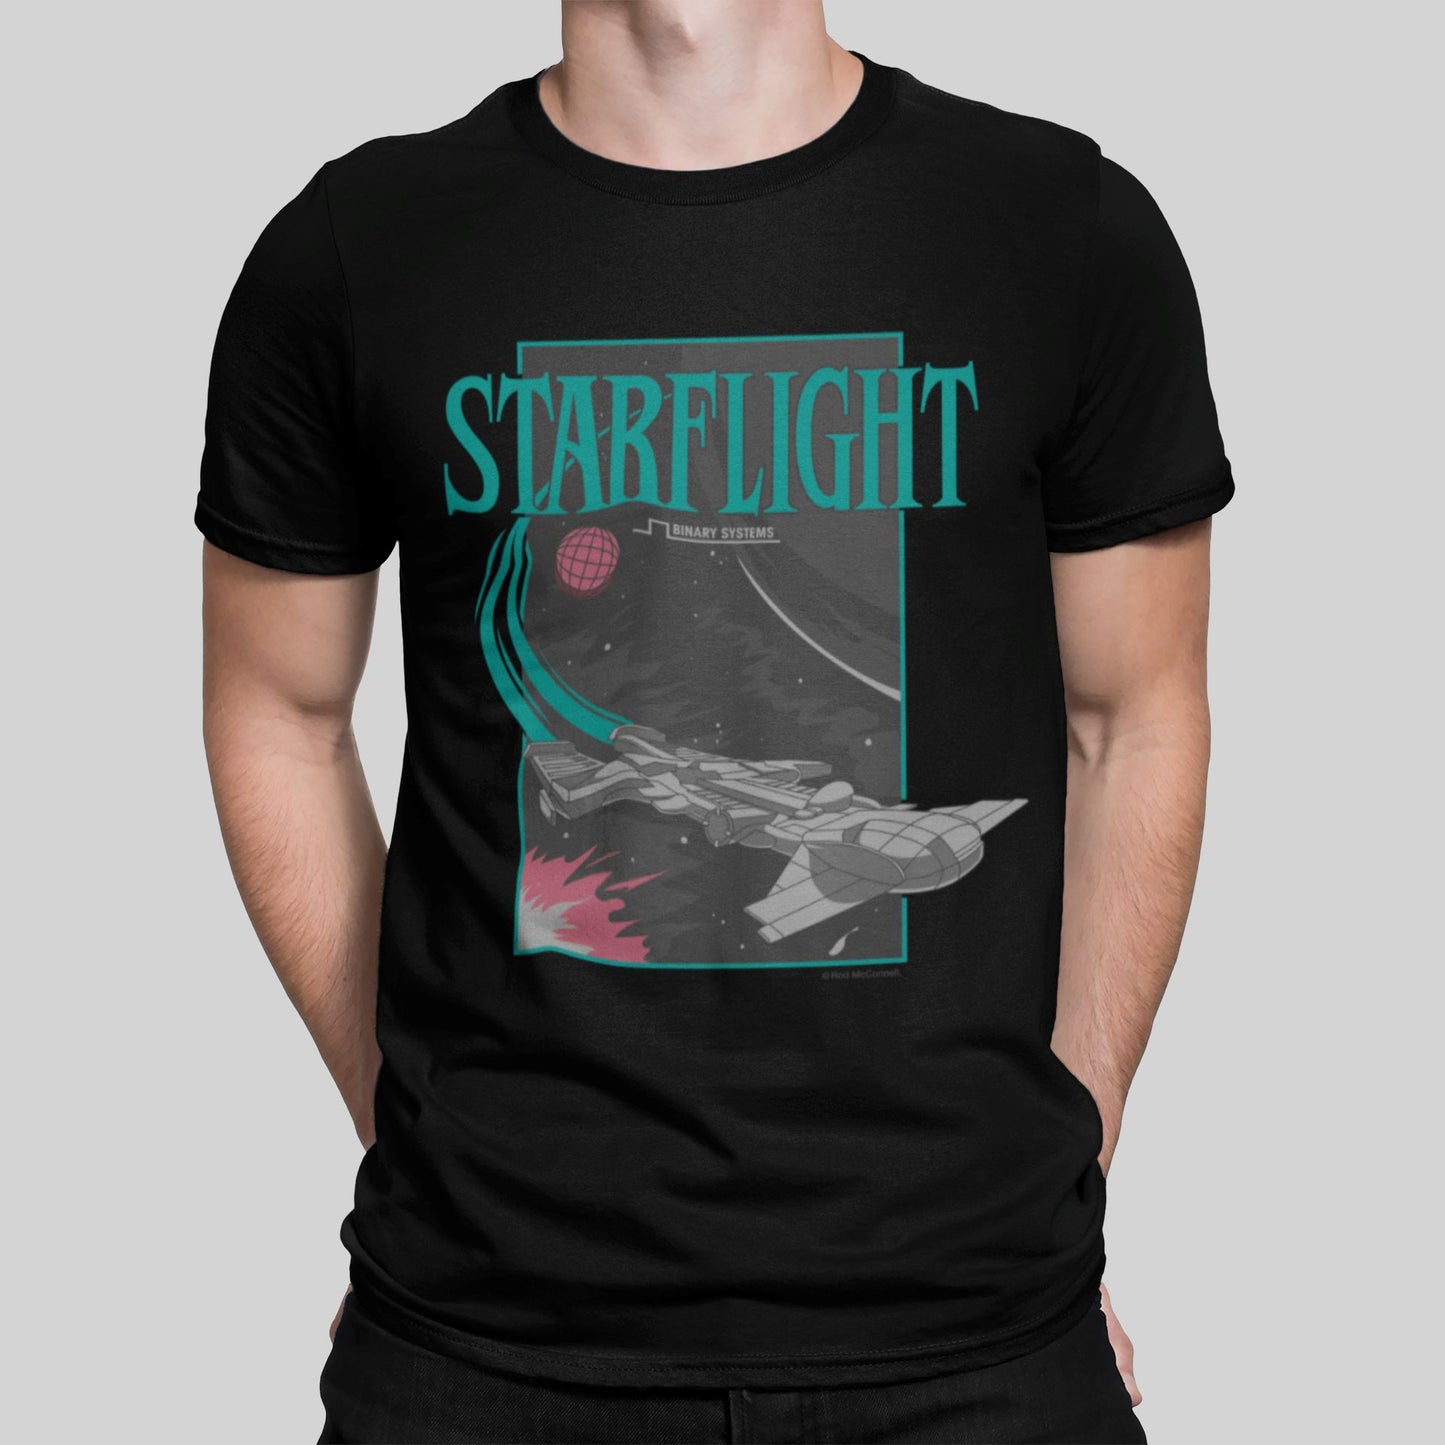 Starflight Retro Gaming T-Shirt T-Shirt Seven Squared Small 34-36" Black 